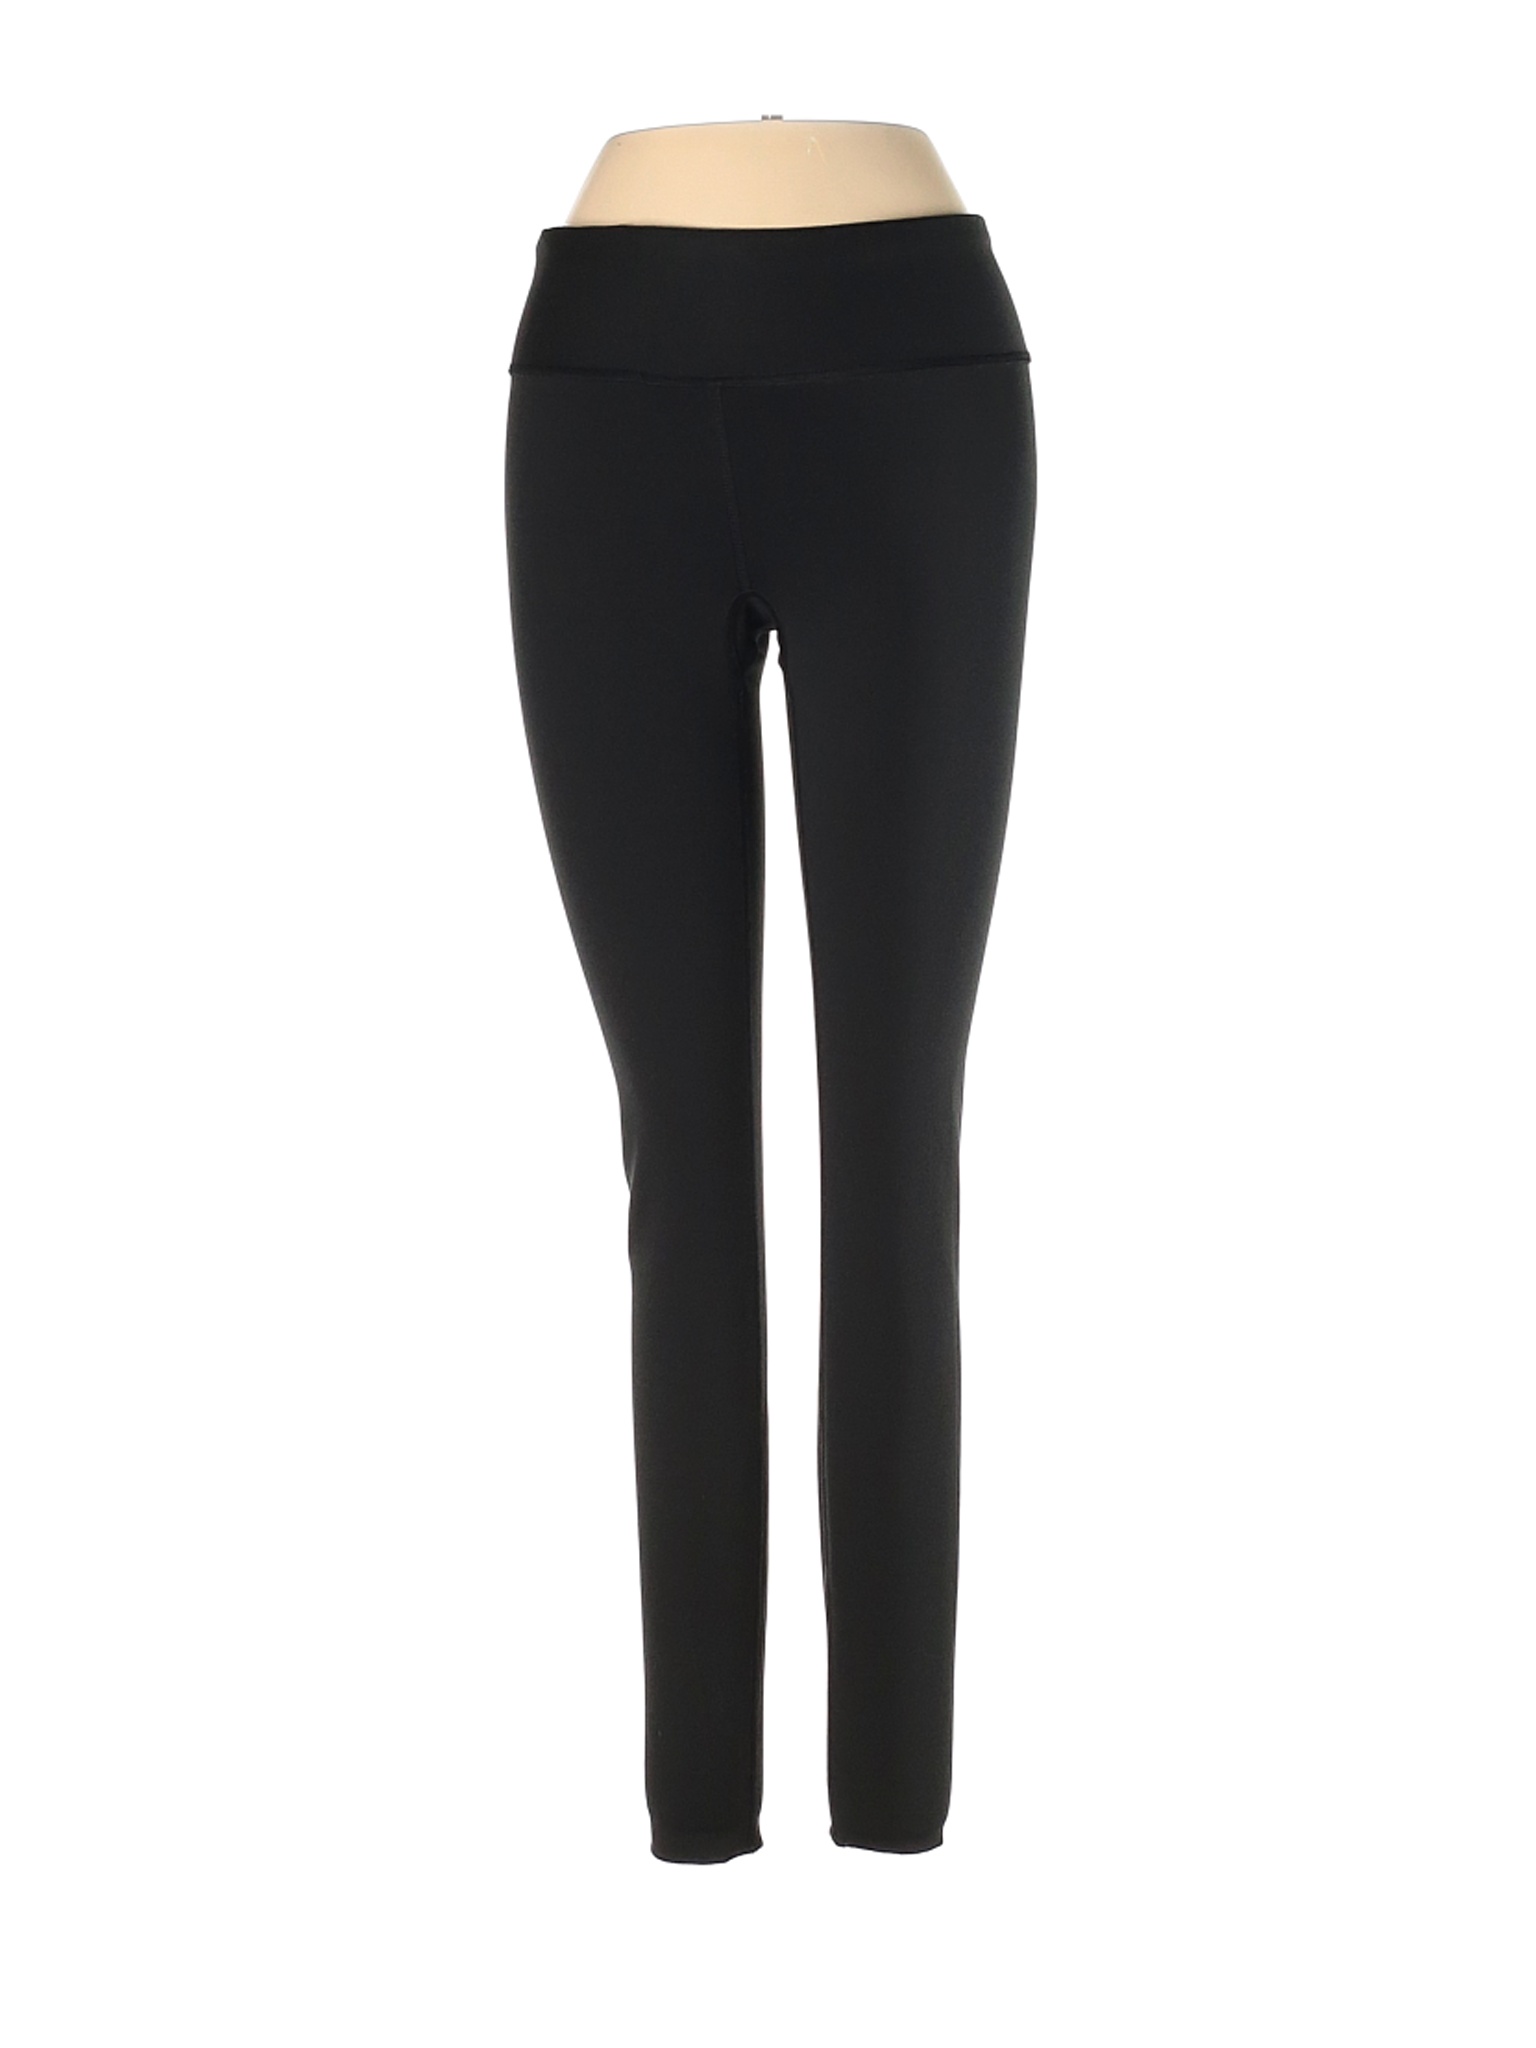 Soma Women Black Active Pants XS | eBay